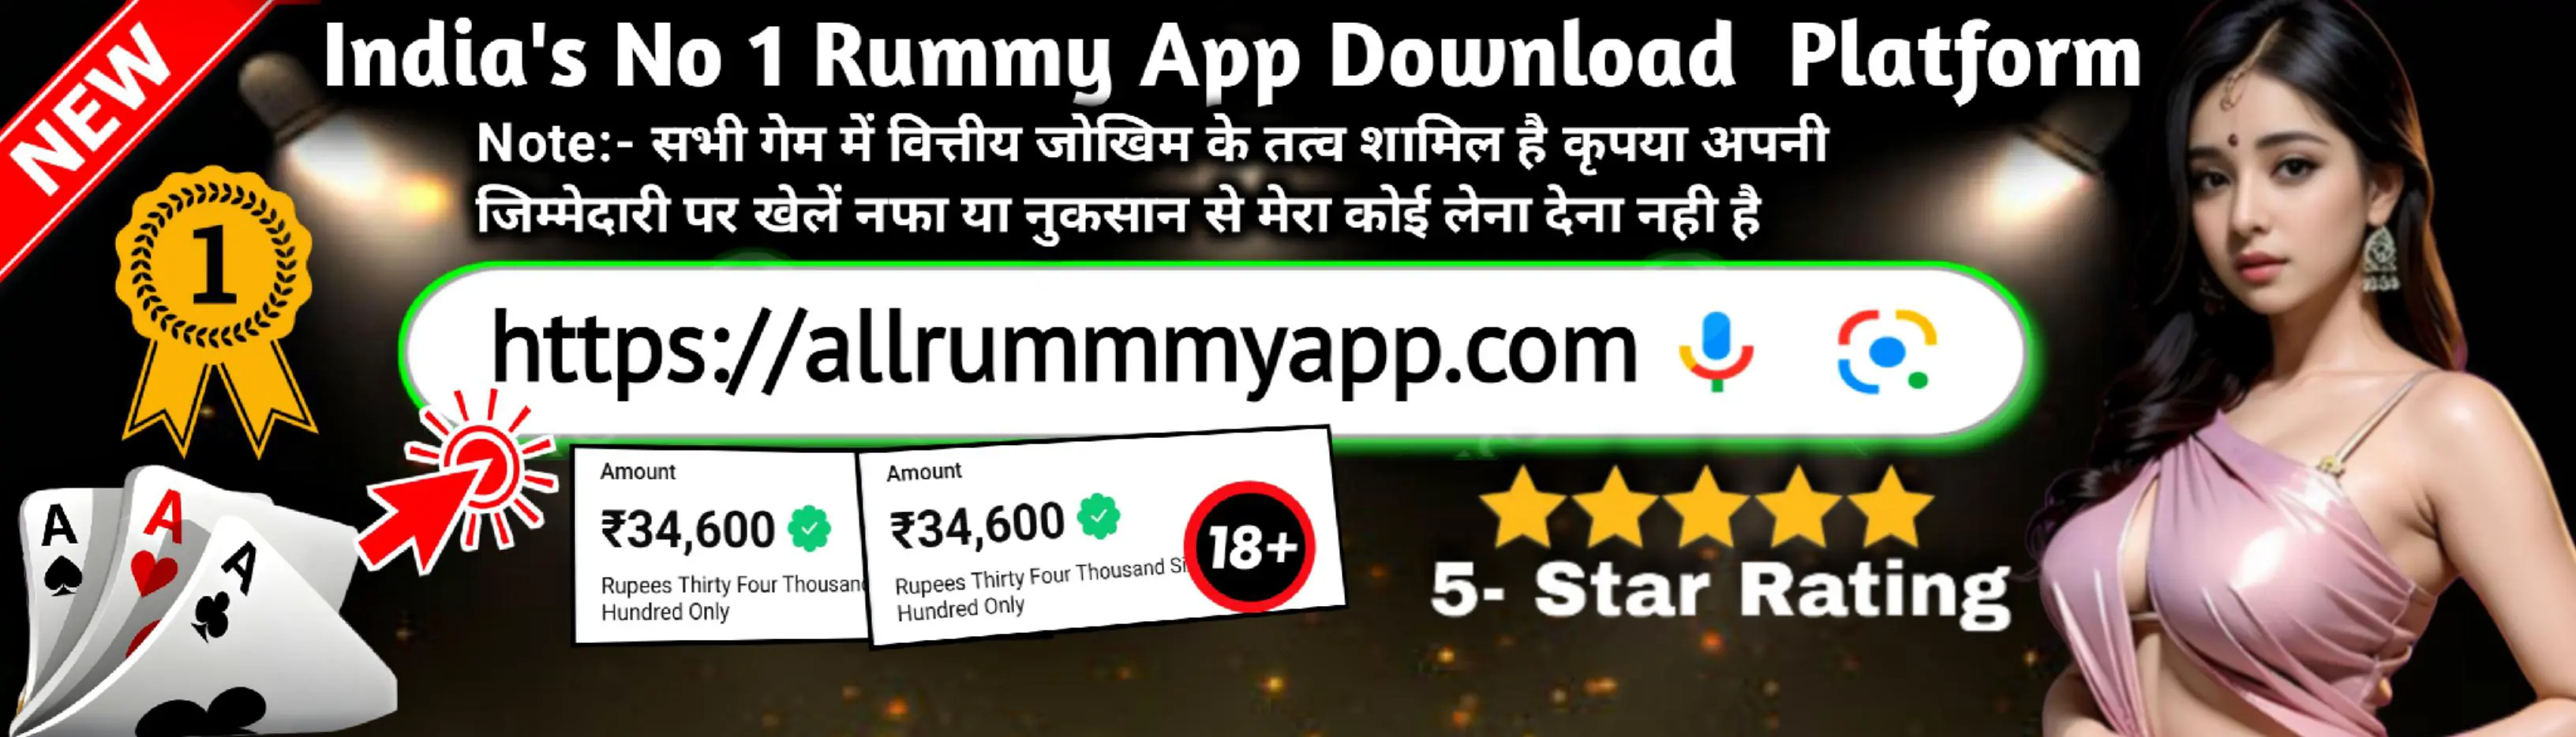 All Rummy Apps - All Rummy App - AllRummmyApp Banner